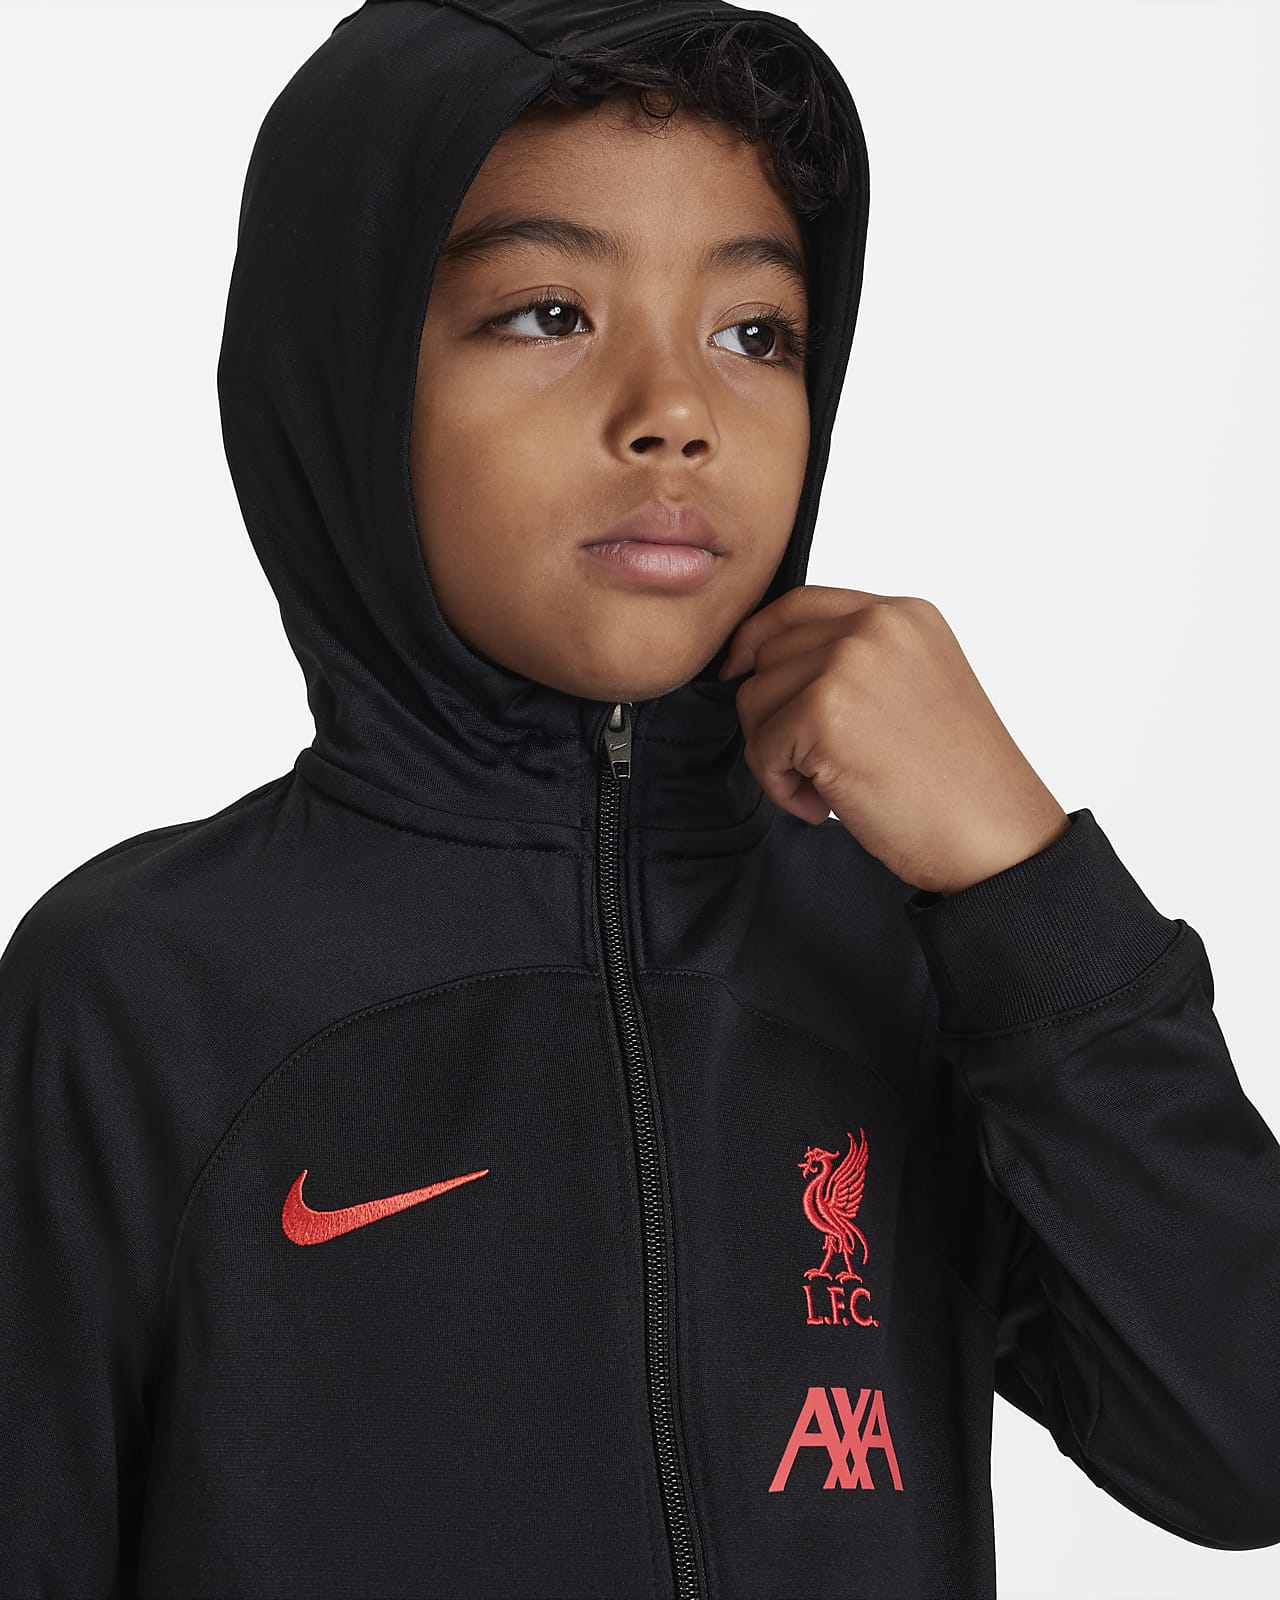 Liverpool FC Strike Chándal de fútbol con capucha - Niño/a pequeño/a. Nike